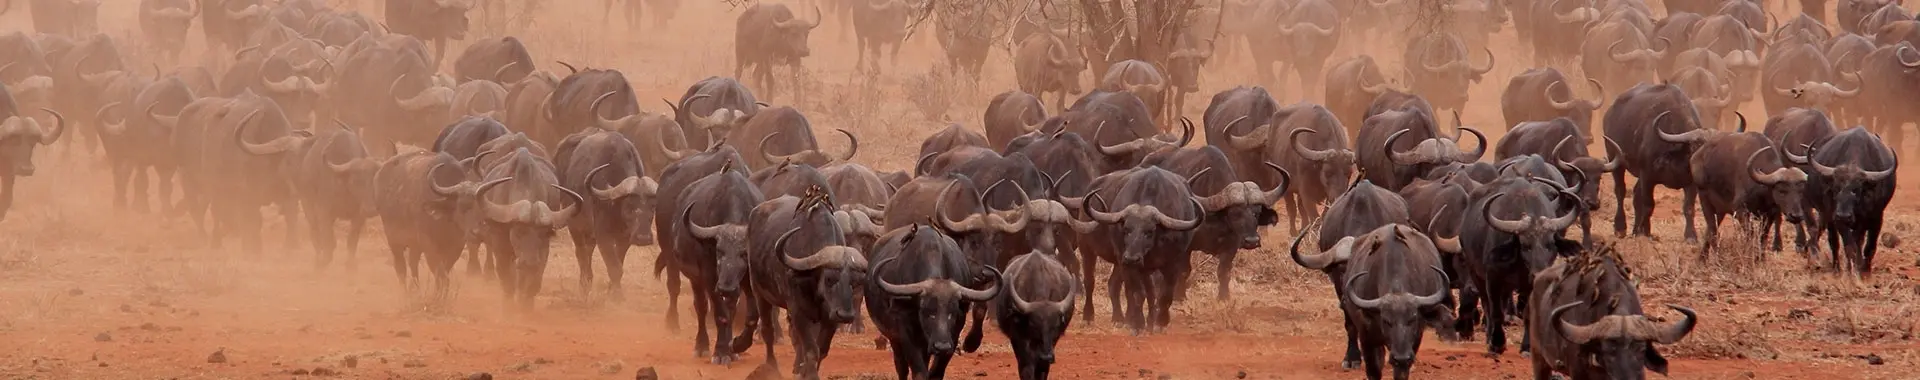 Сафари с буйволами в Танзании